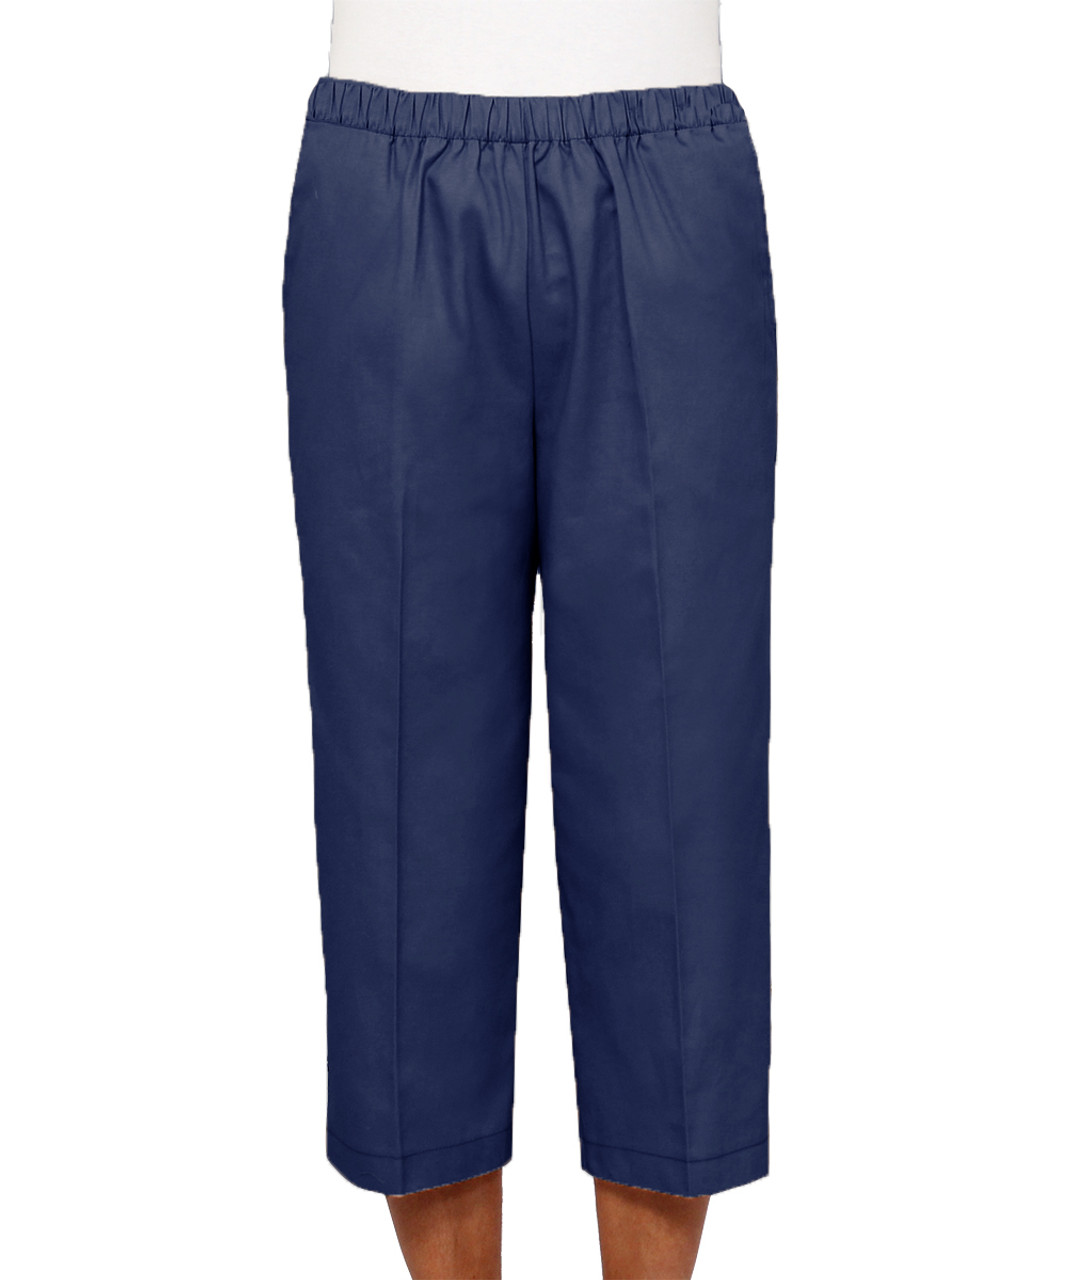 Silvert's 234300304 Women's Adaptive Cotton Capri Pants, Large, NAVY